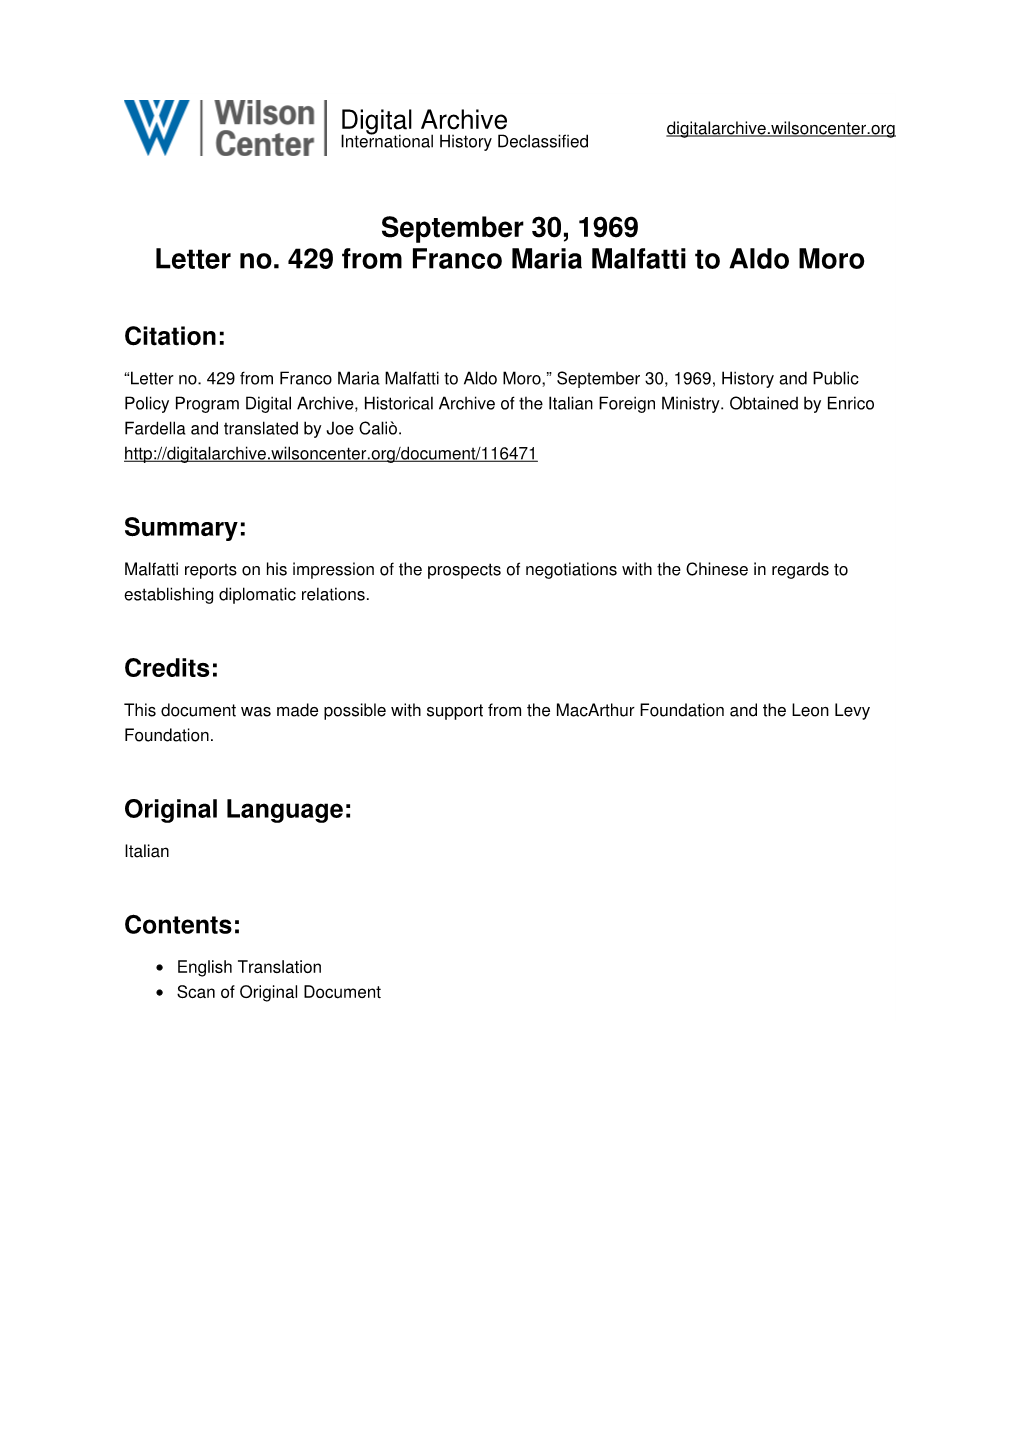 September 30, 1969 Letter No. 429 from Franco Maria Malfatti to Aldo Moro